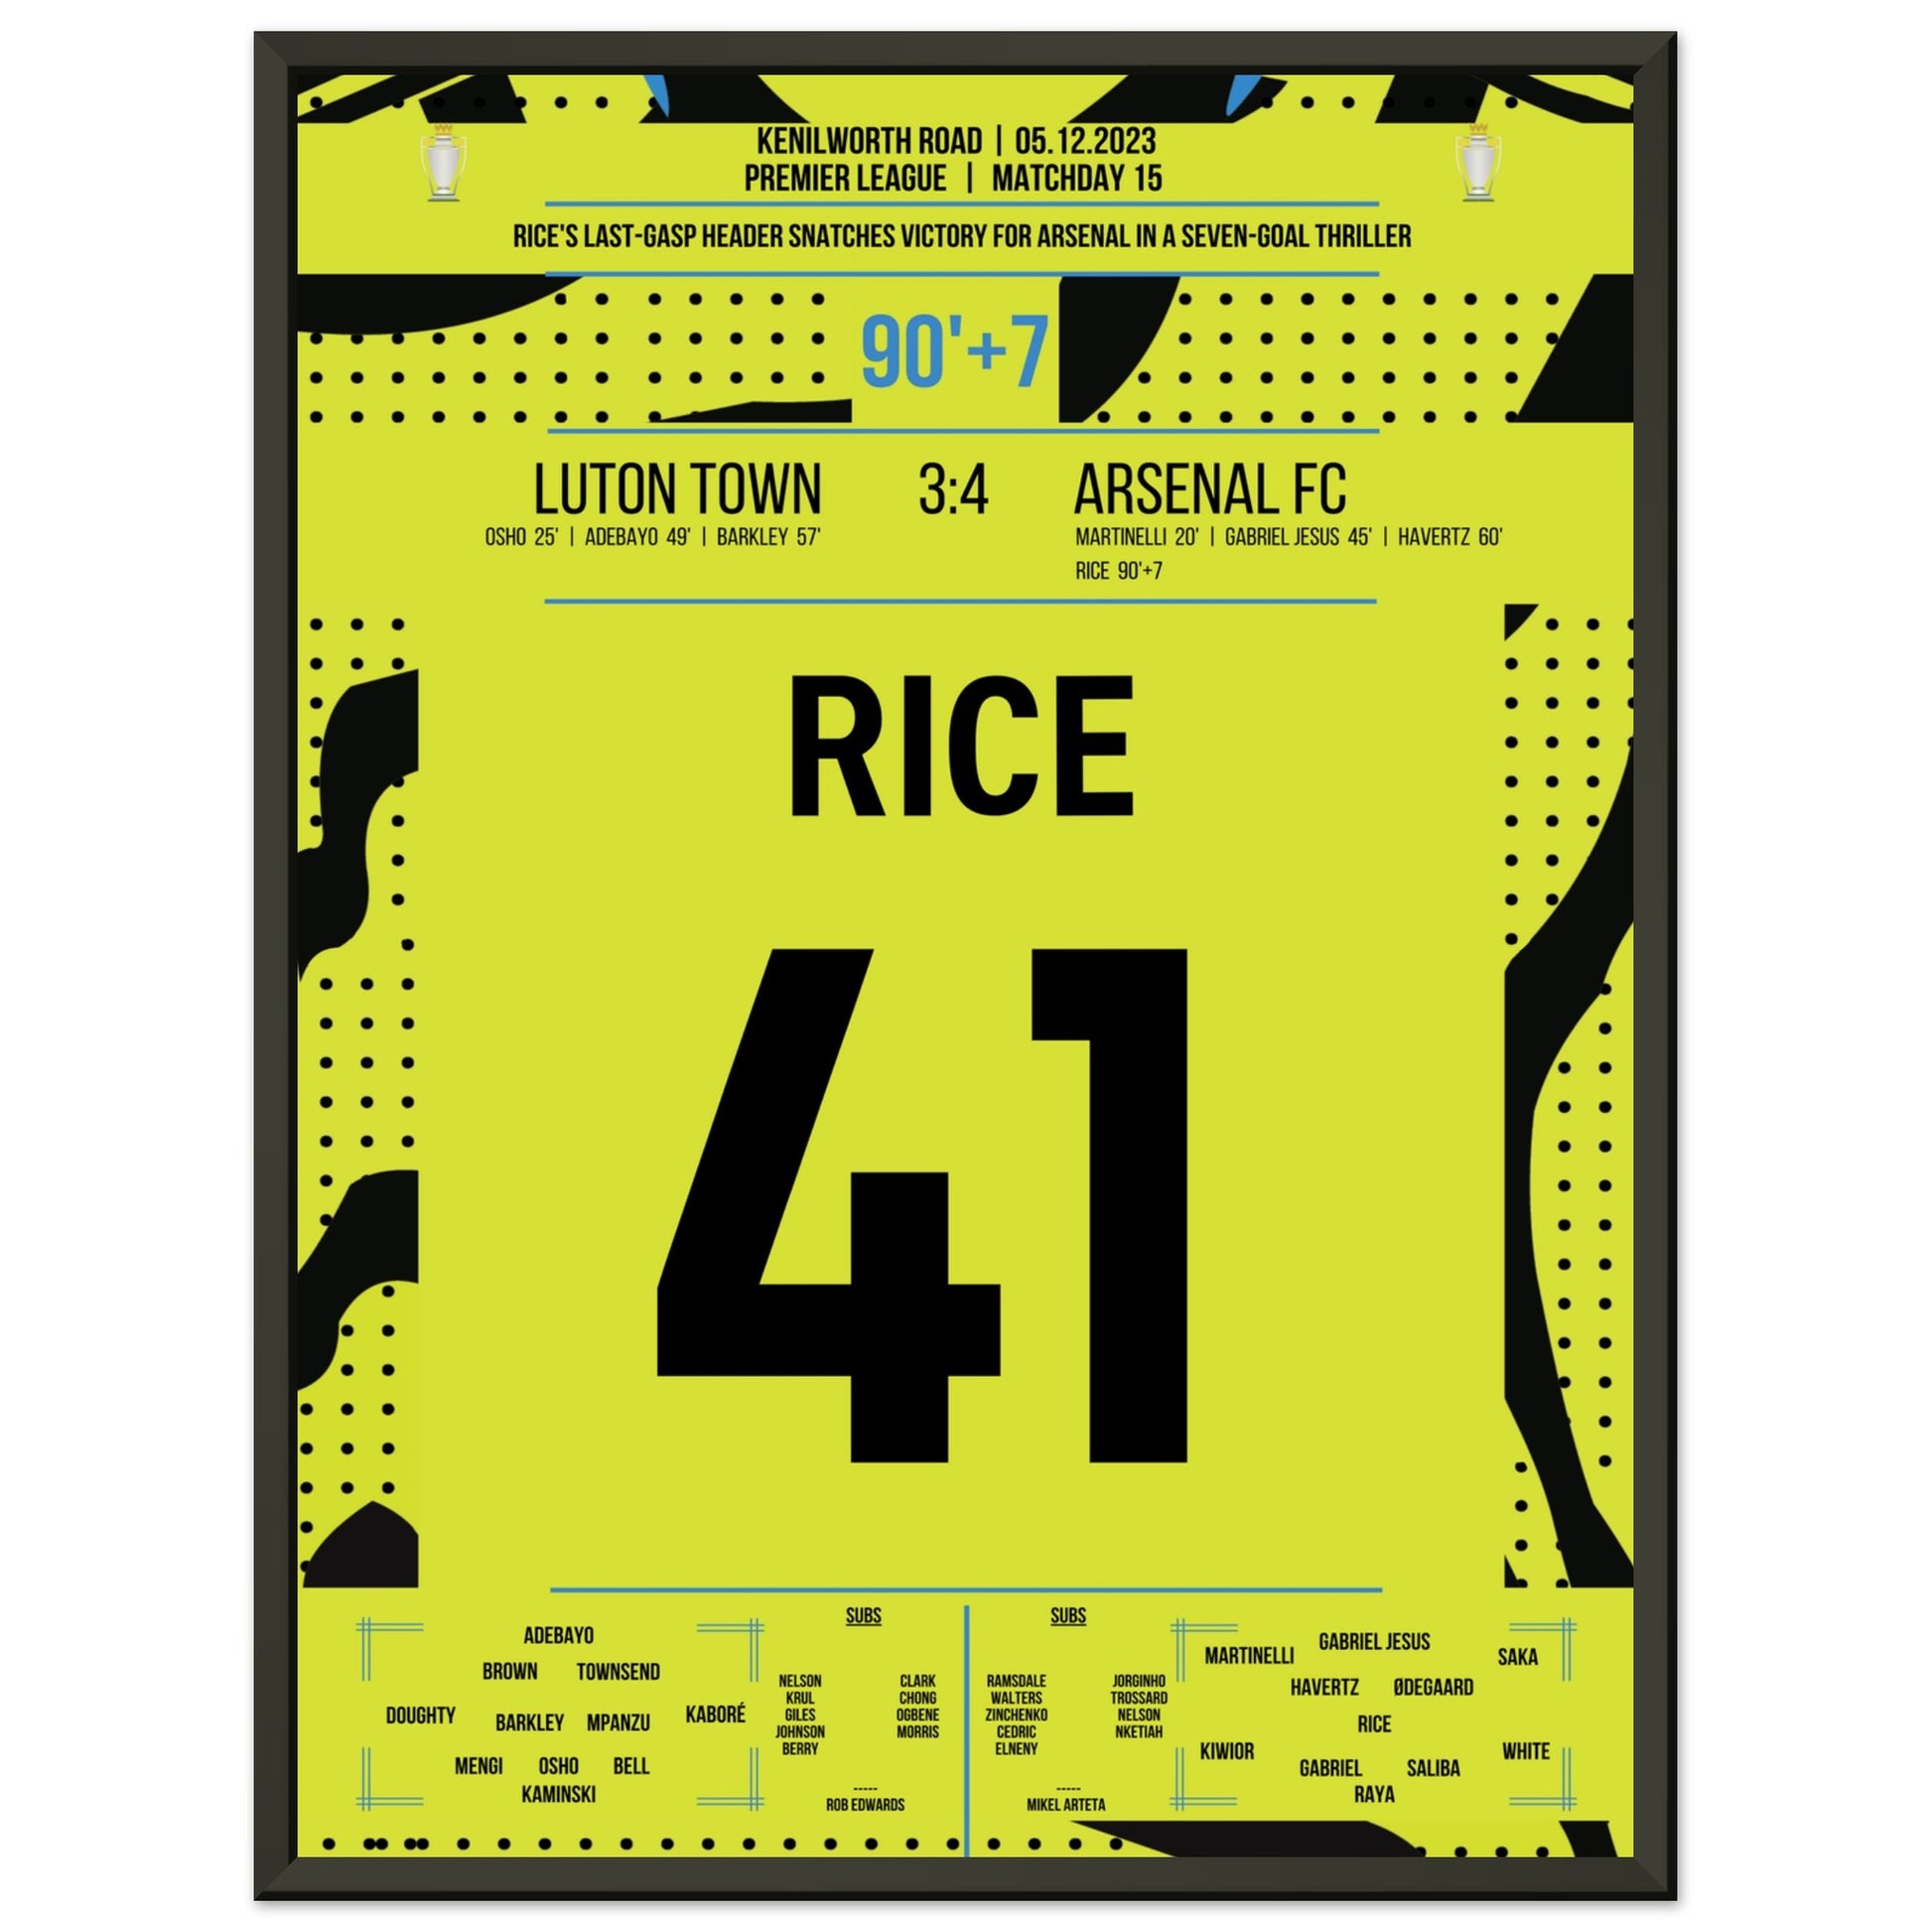 Rice köpft Arsenal in letzter Sekunde zum Auswärtssieg 45x60-cm-18x24-Schwarzer-Aluminiumrahmen